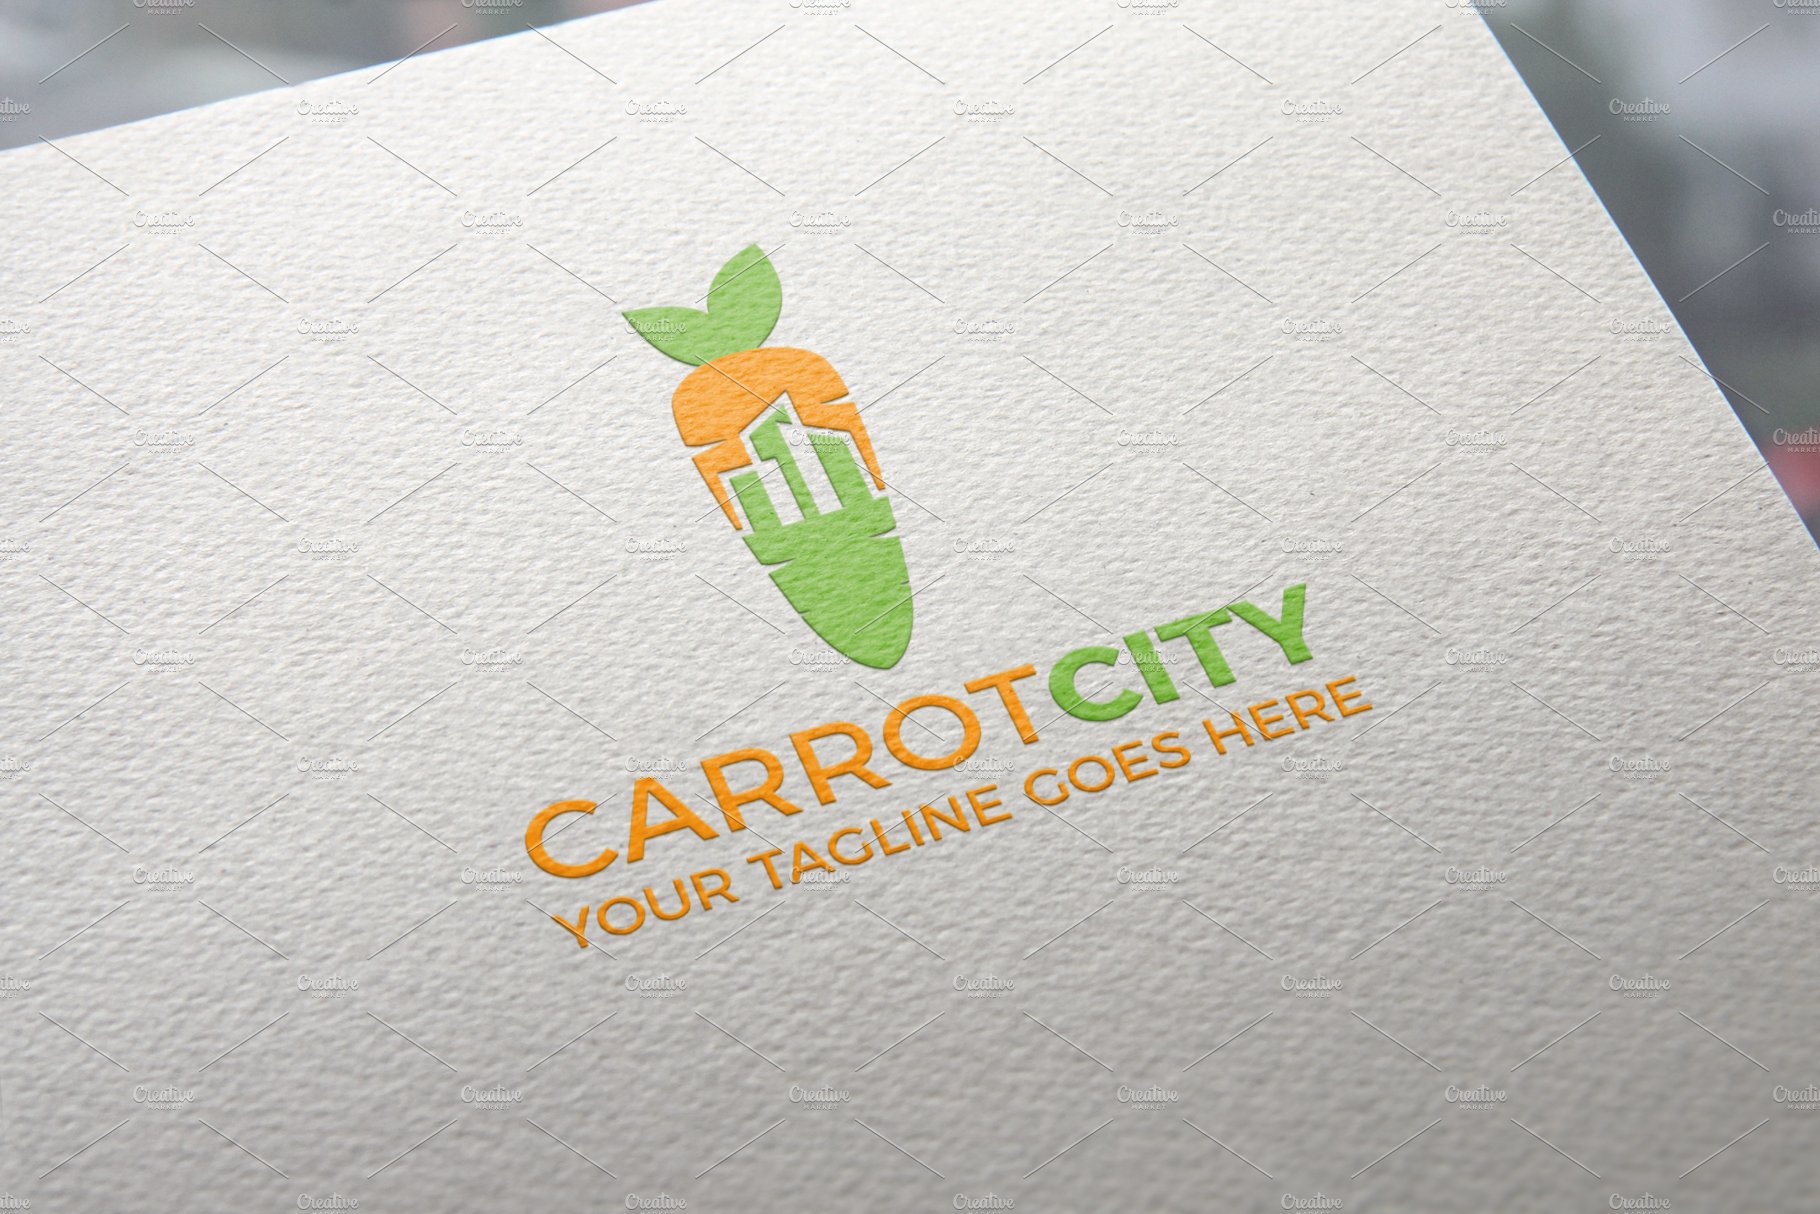 Carrot City Logo cover image.